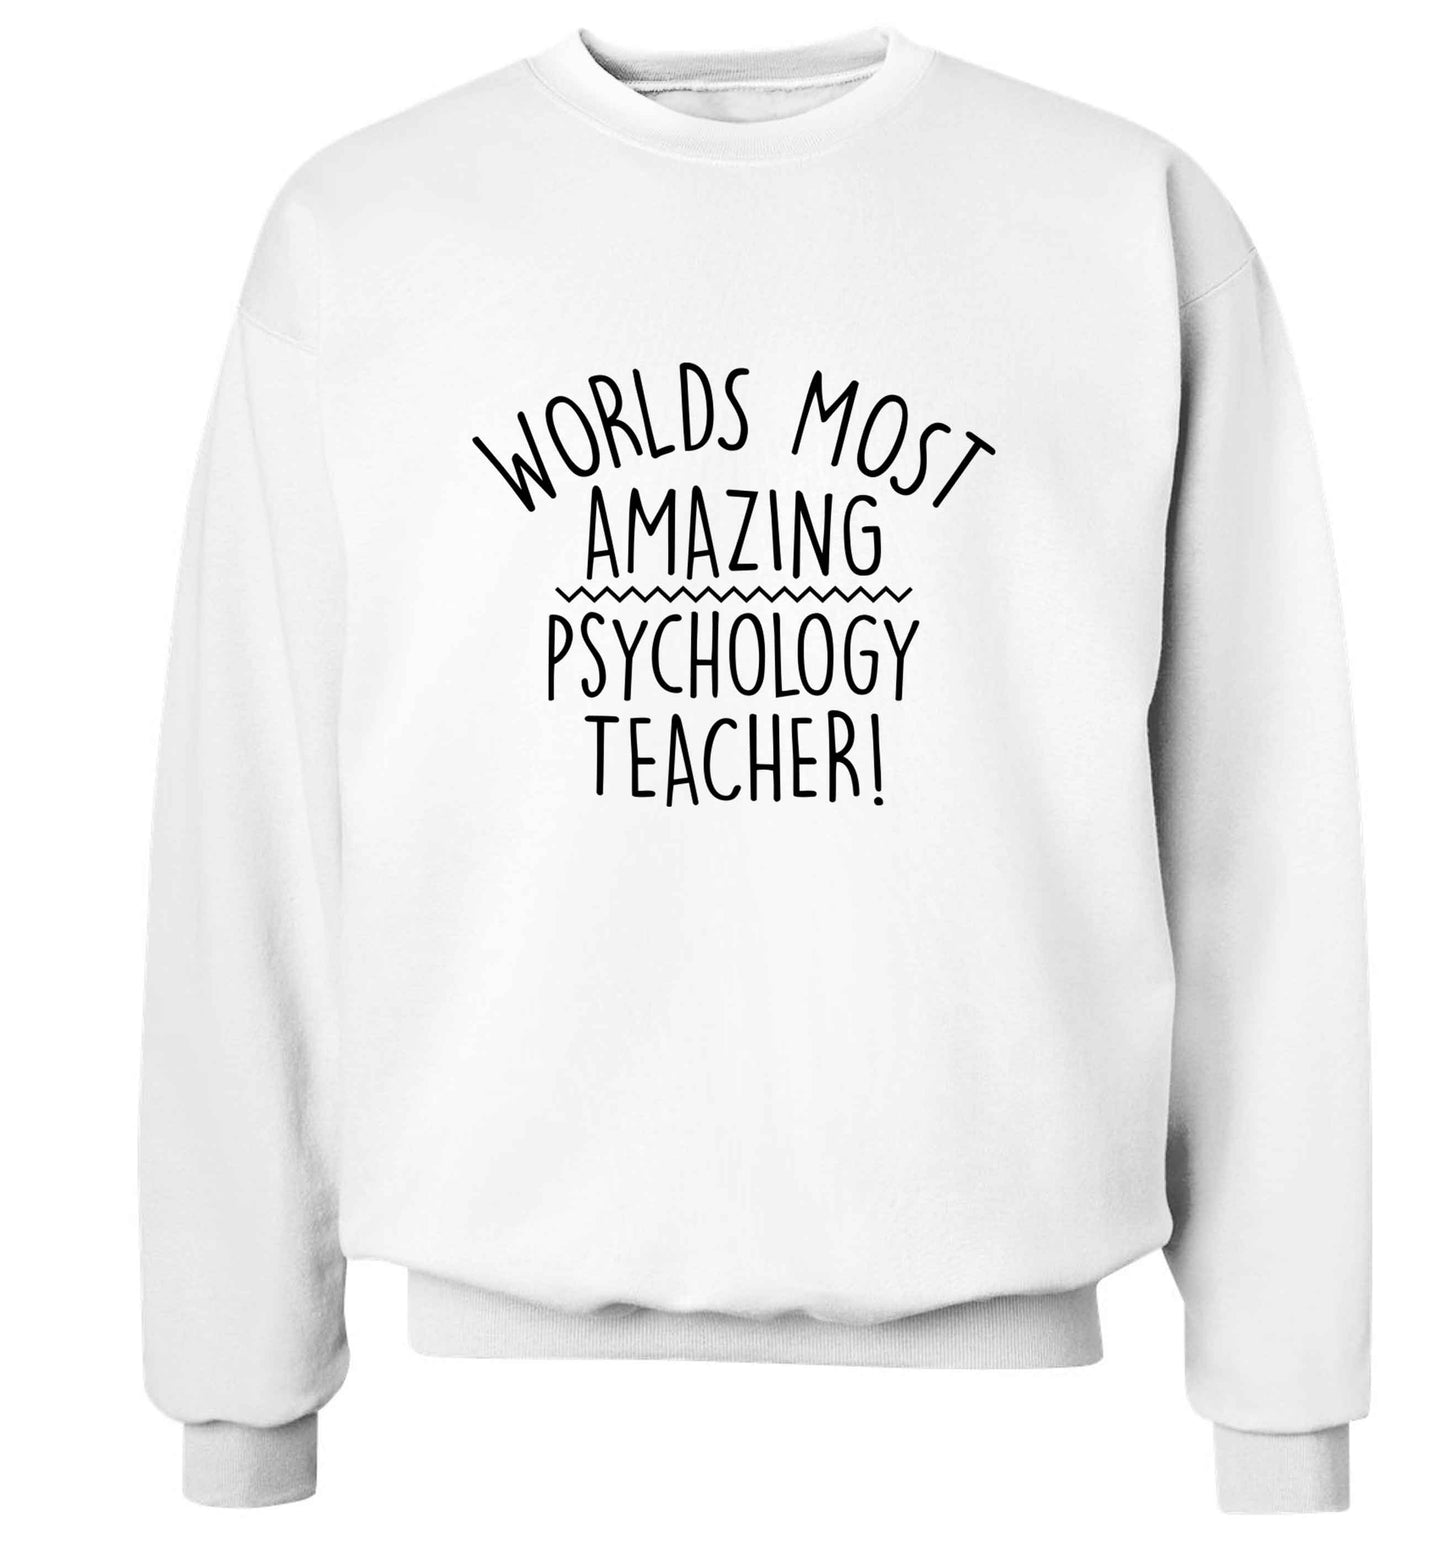 Worlds most amazing psychology teacher adult's unisex white sweater 2XL